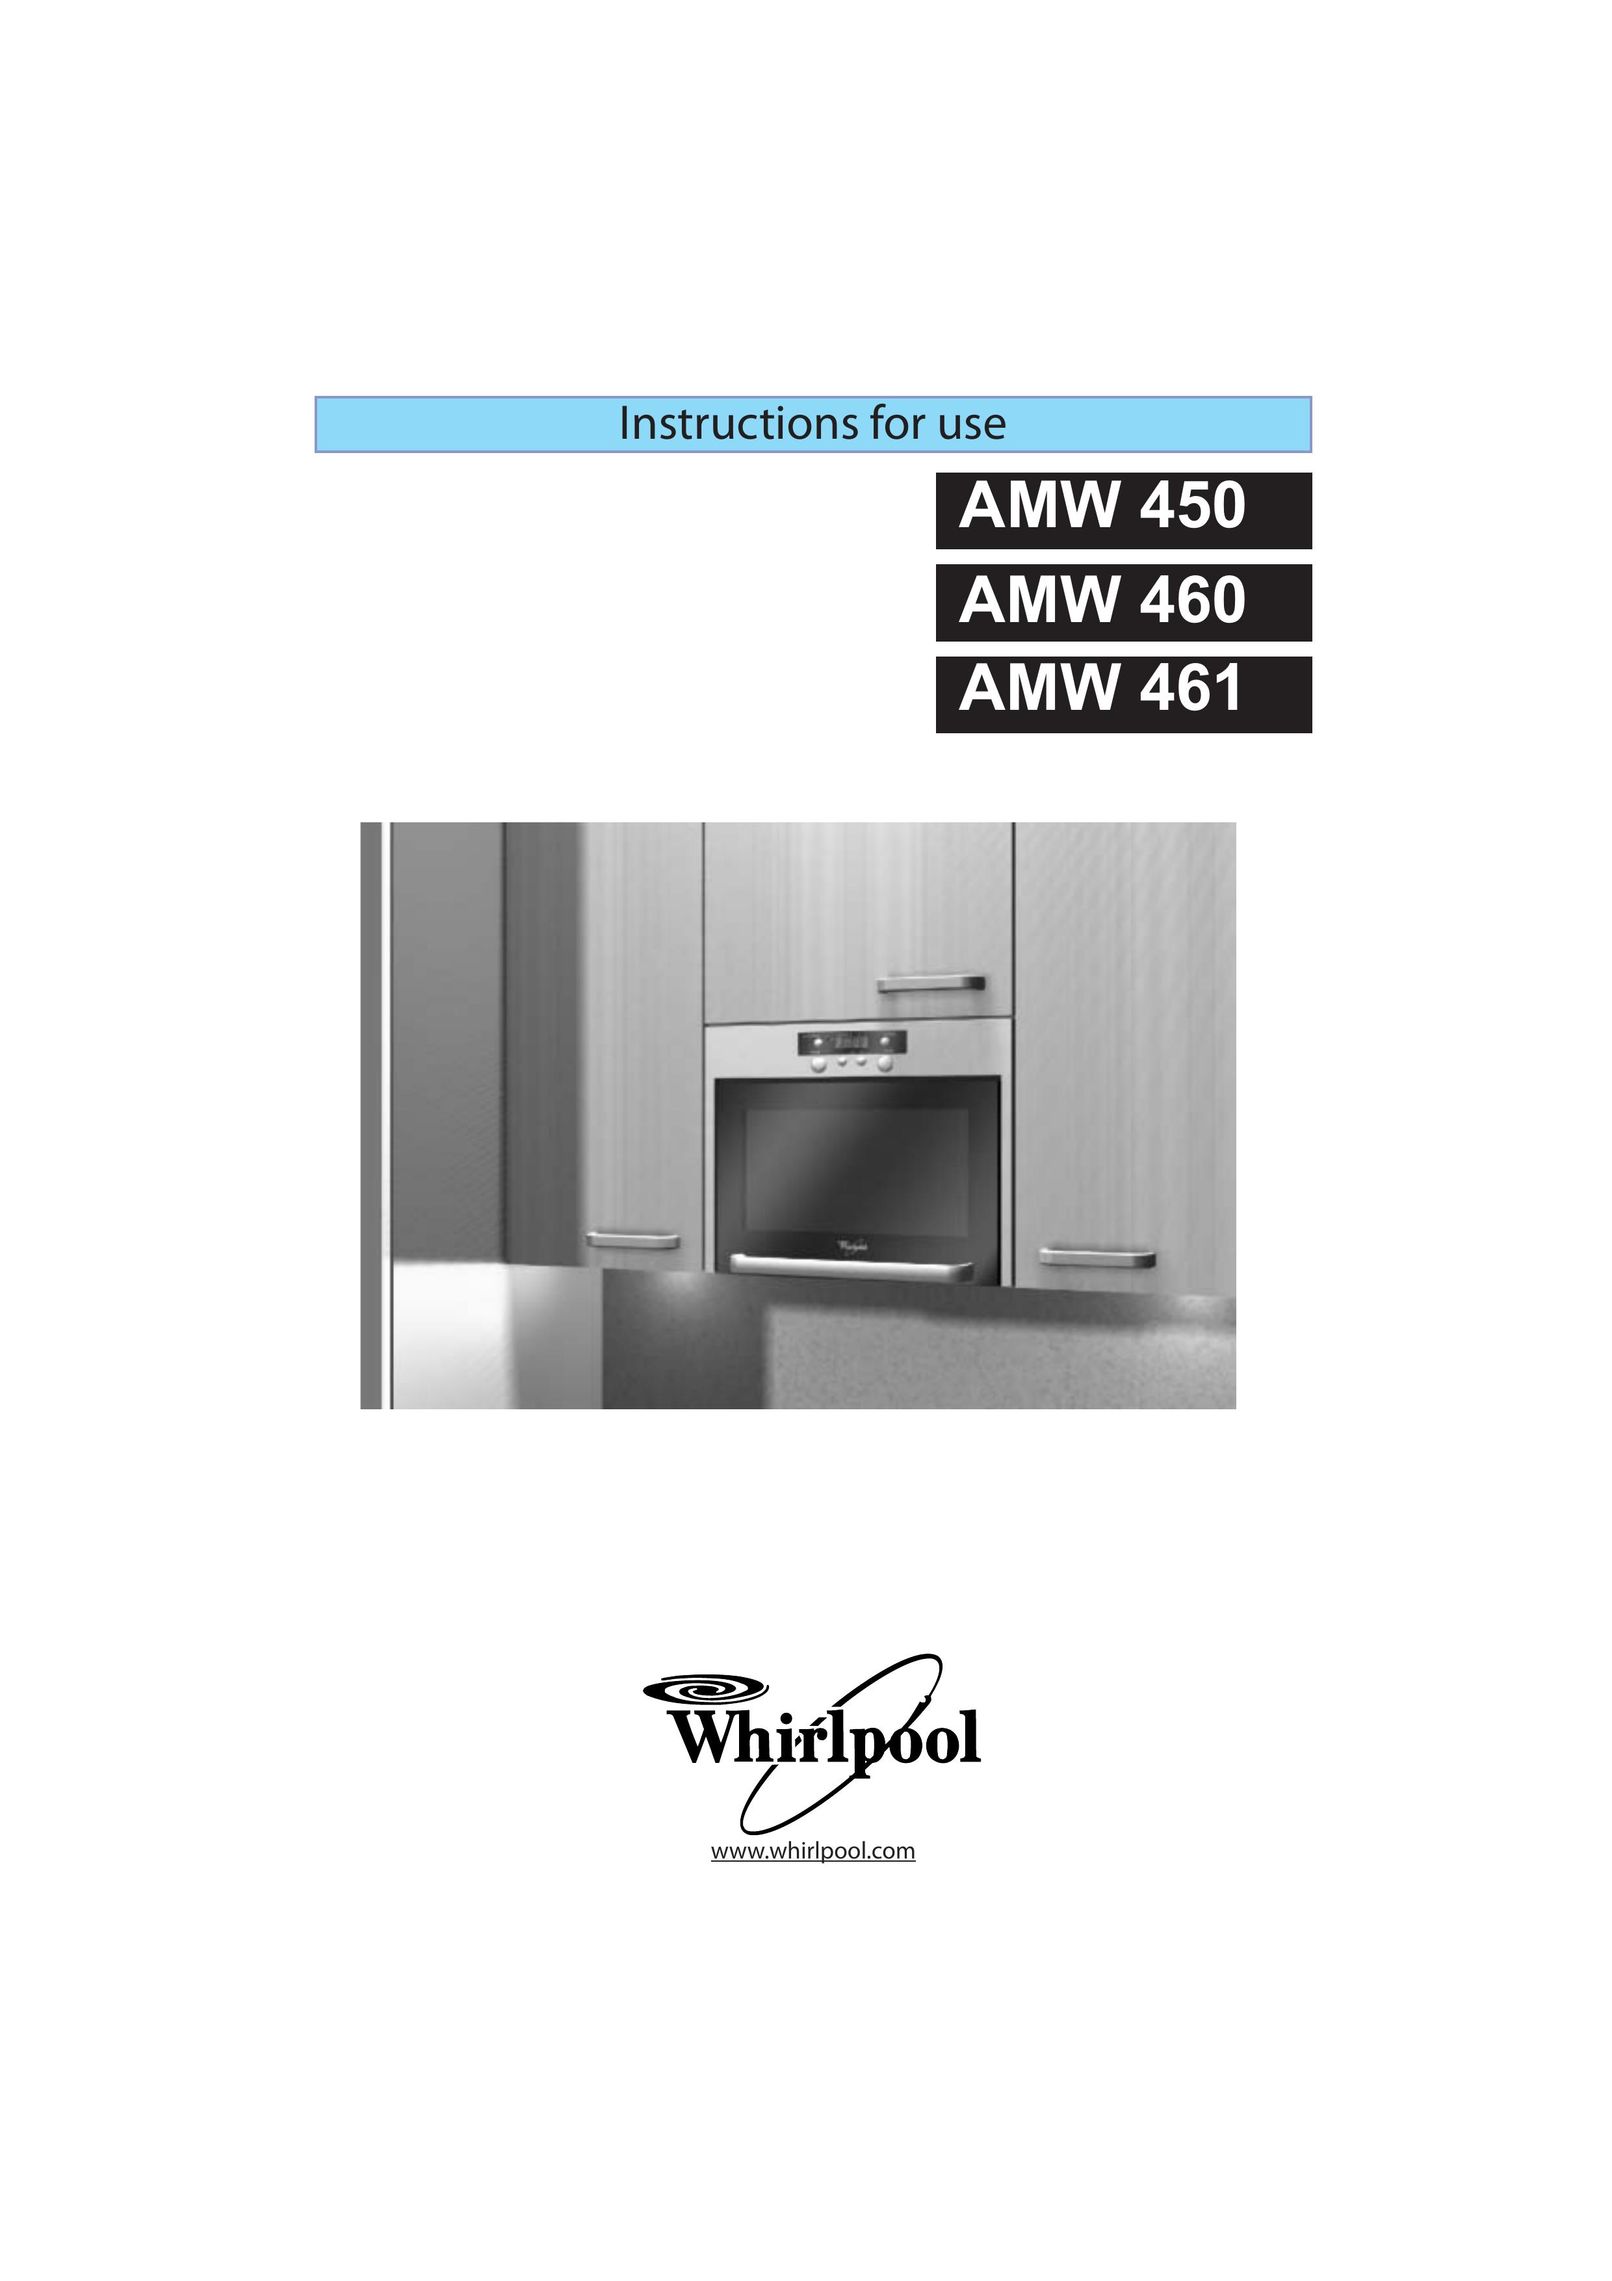 Whirlpool AMW 461 Microwave Oven User Manual